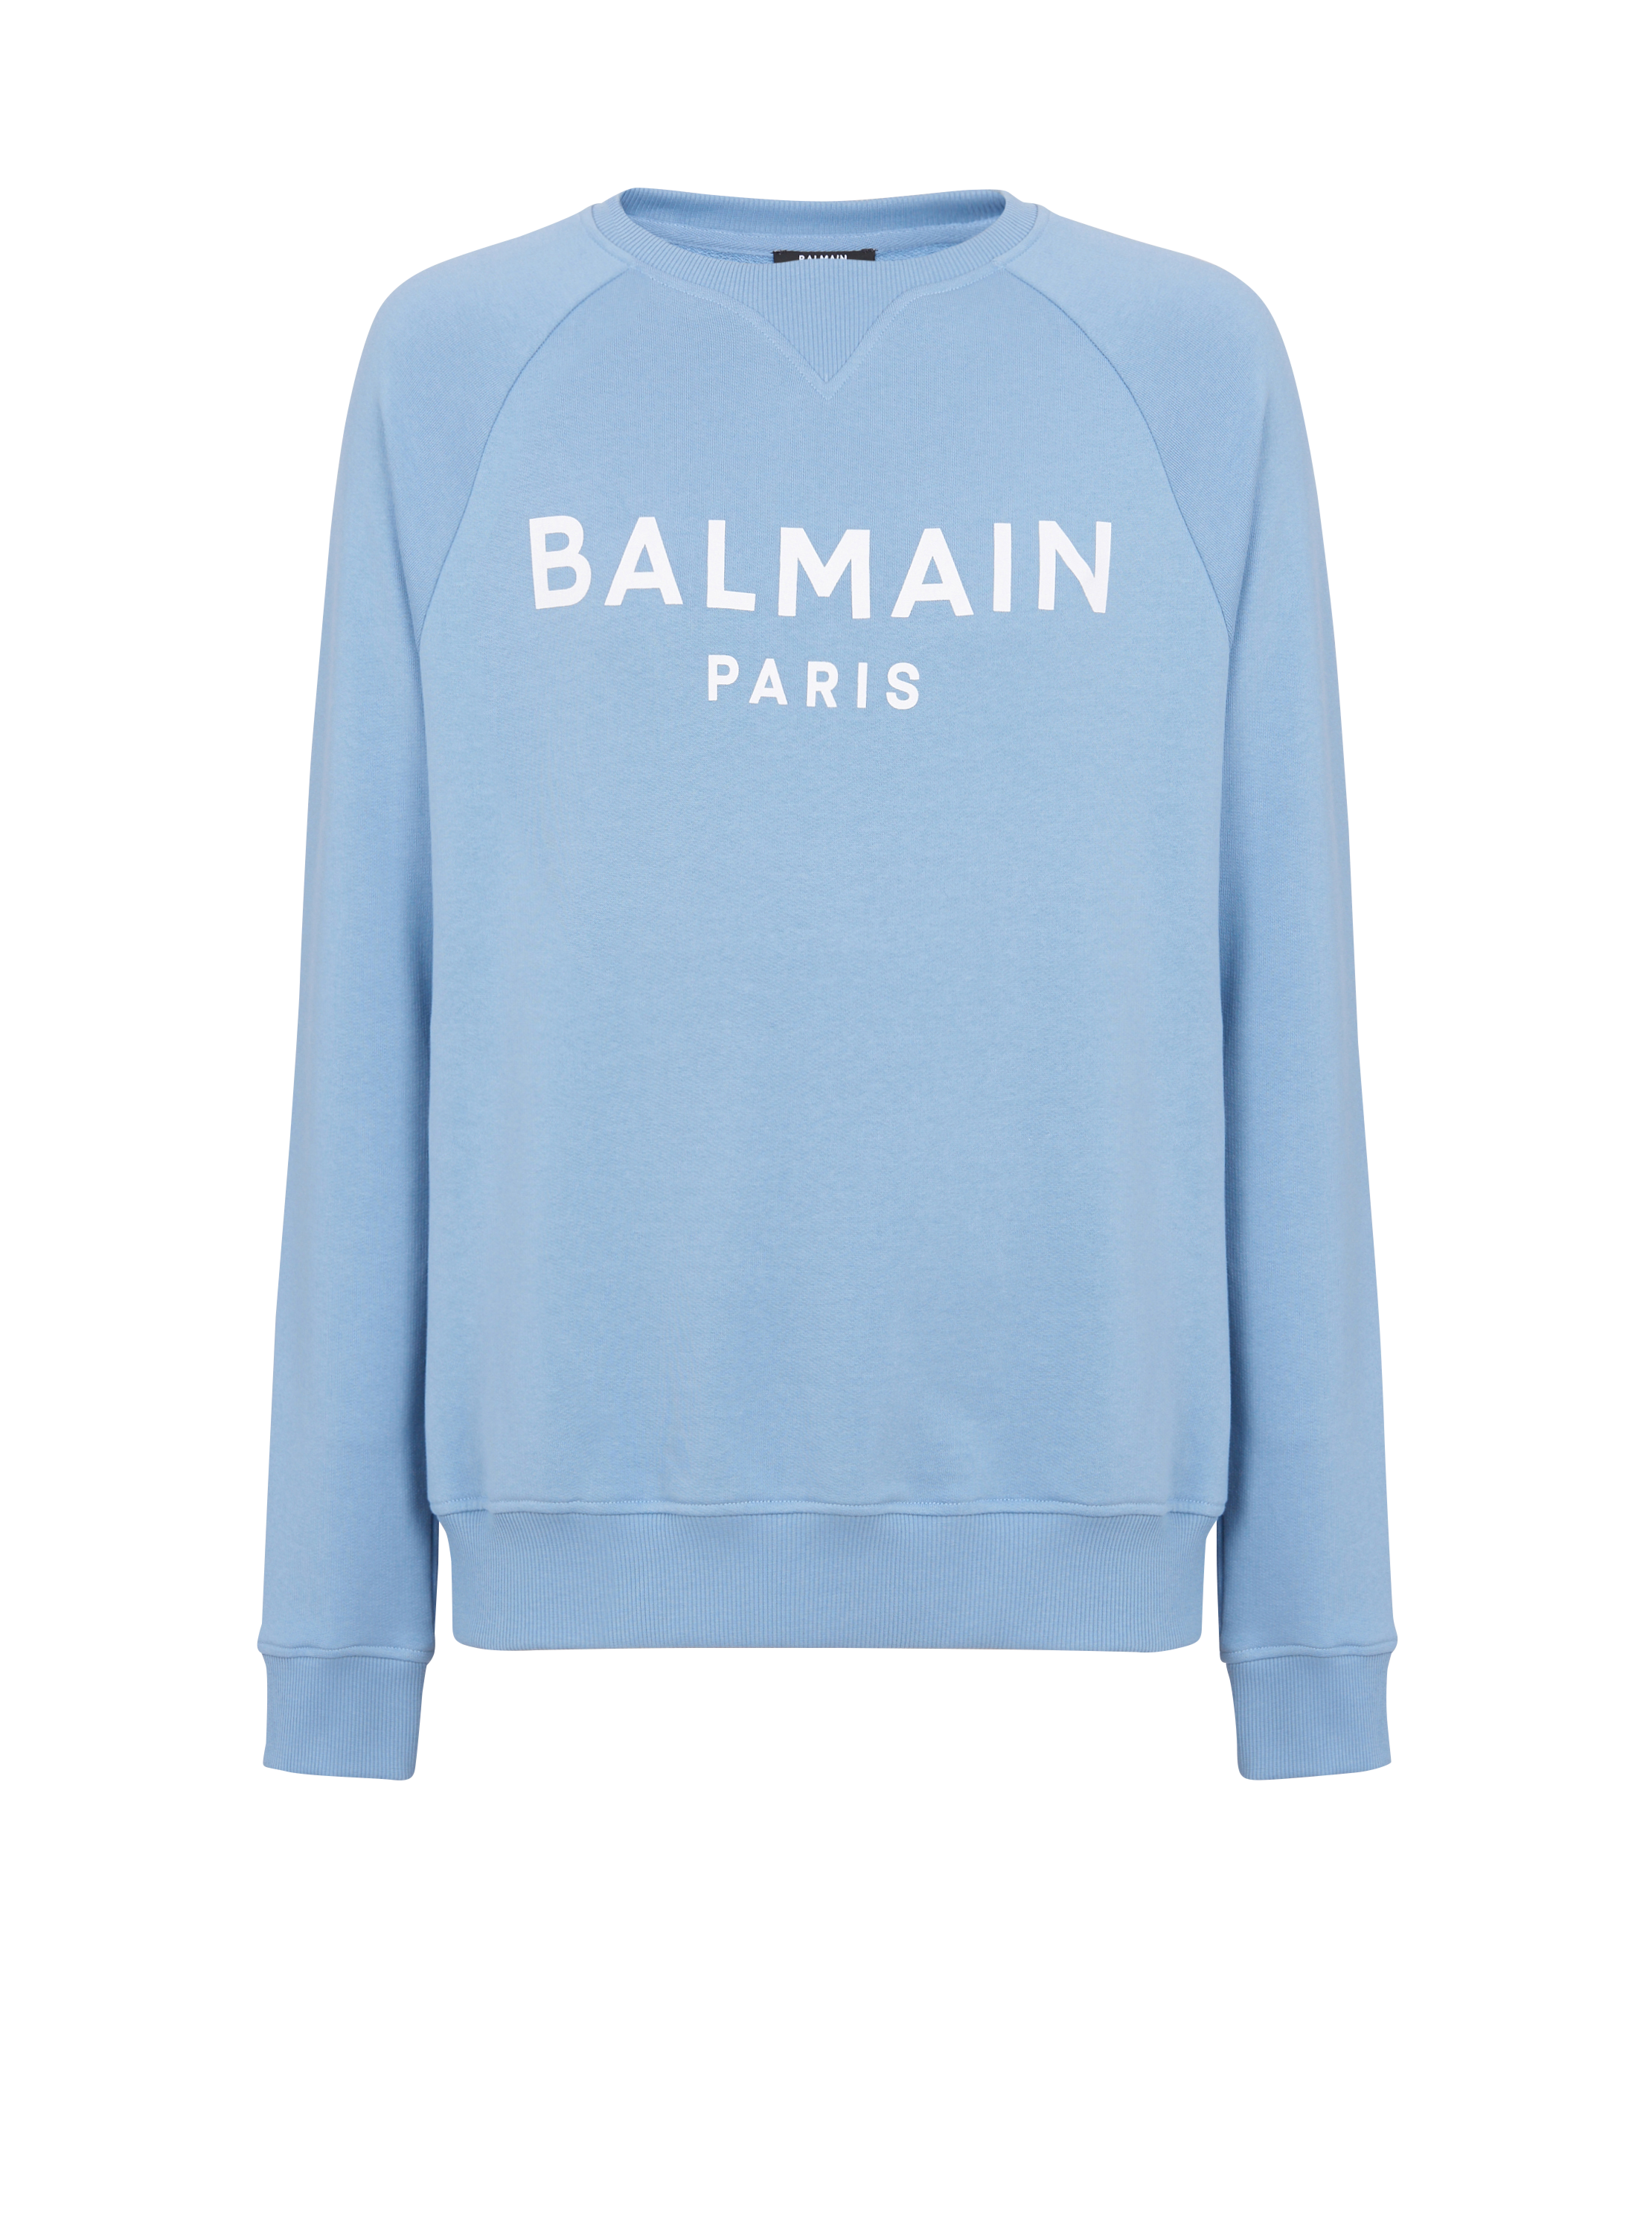 Balmain Paris Sweatshirt, blau, hi-res